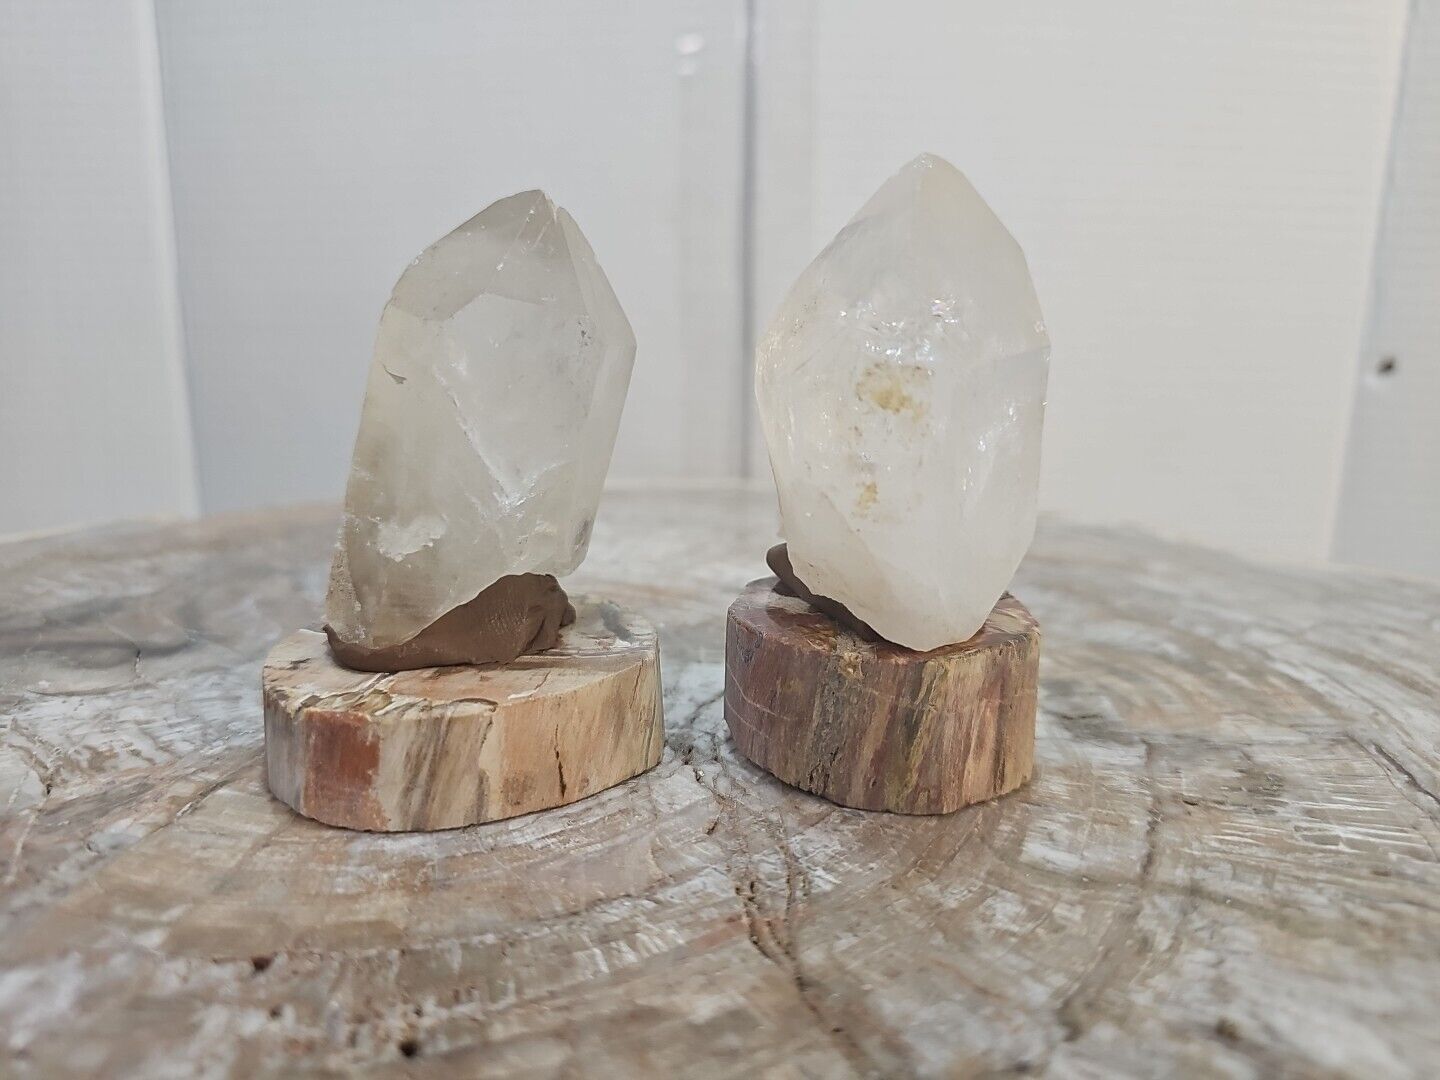 2 Pcs 427g Quartz crystals With 2 Polished Petrified Wood slices from Arizona